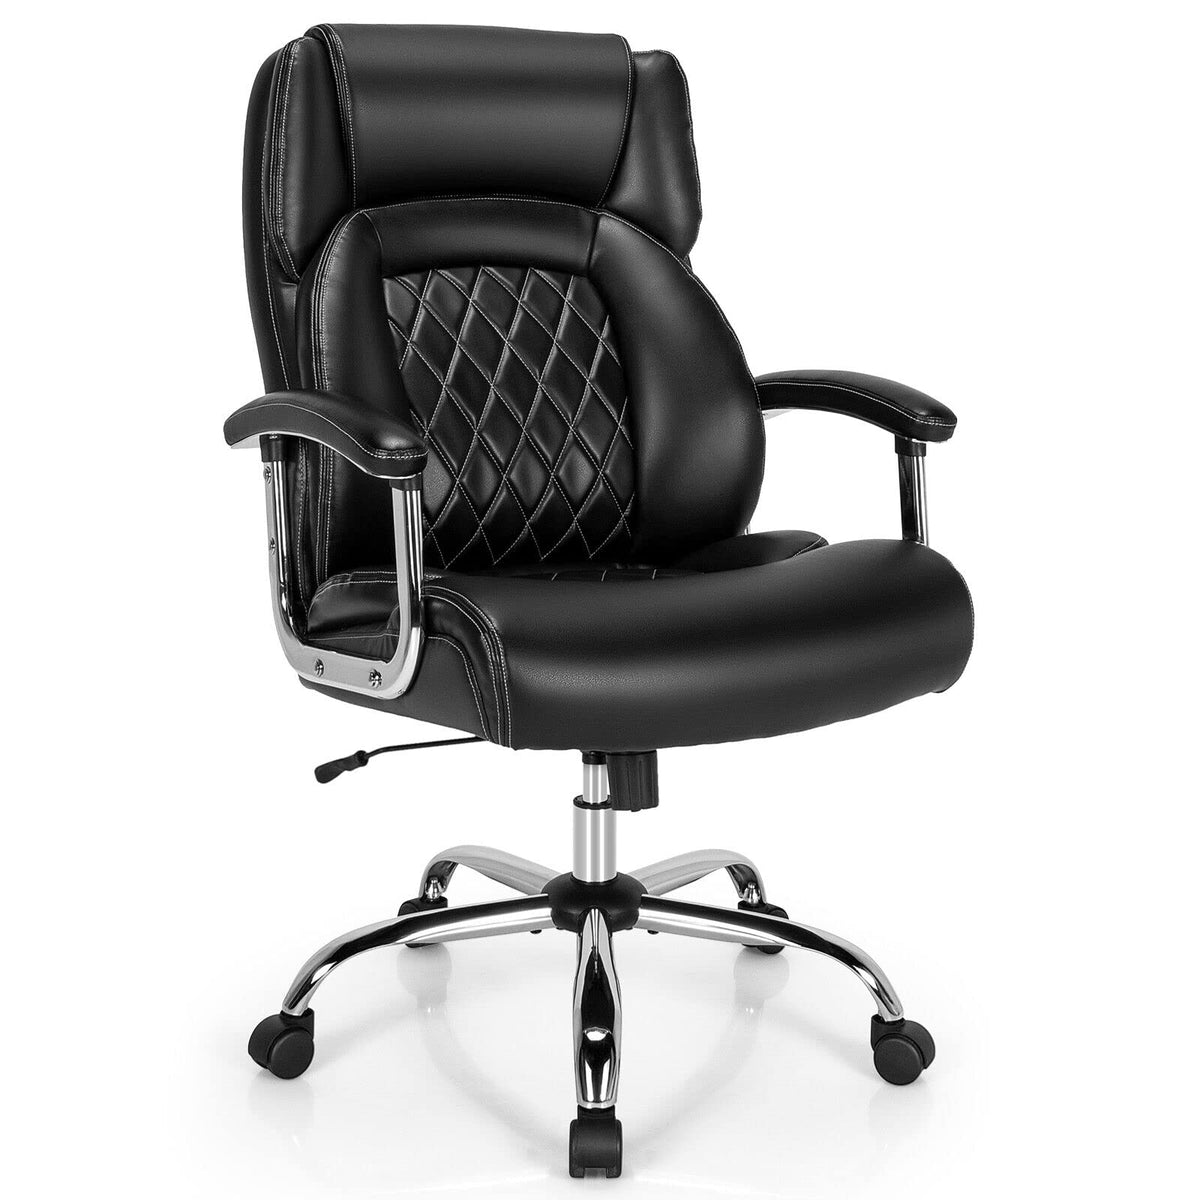 Giantex Big & Tall Office Chair, Height Adjustable Executive Chair